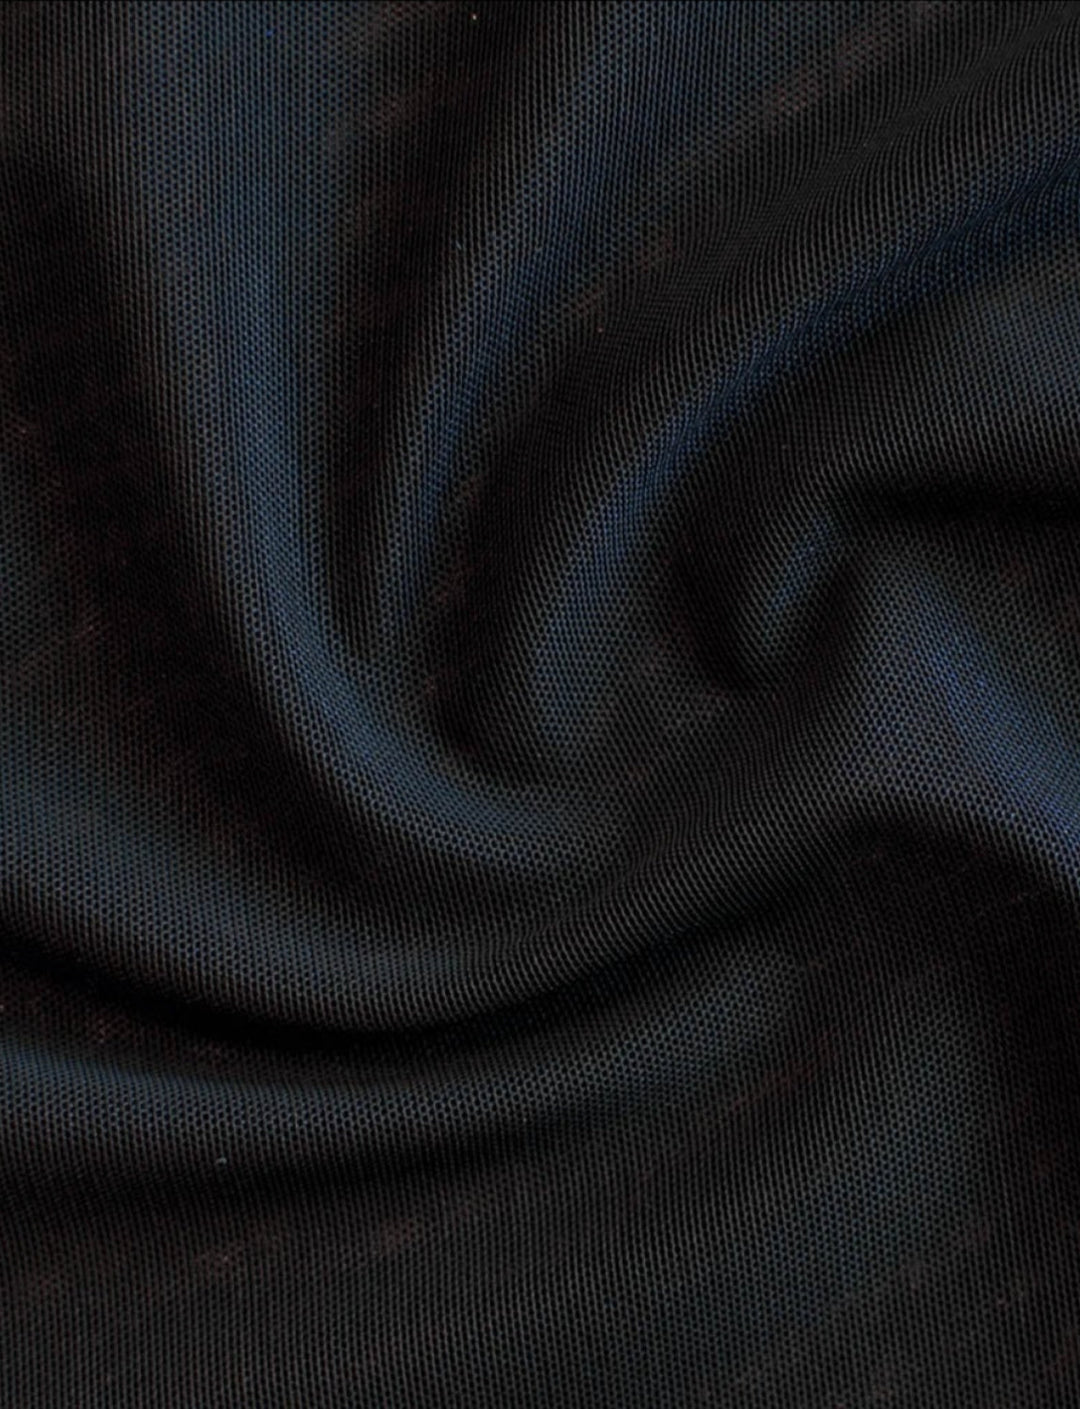 black mesh fabric swatch